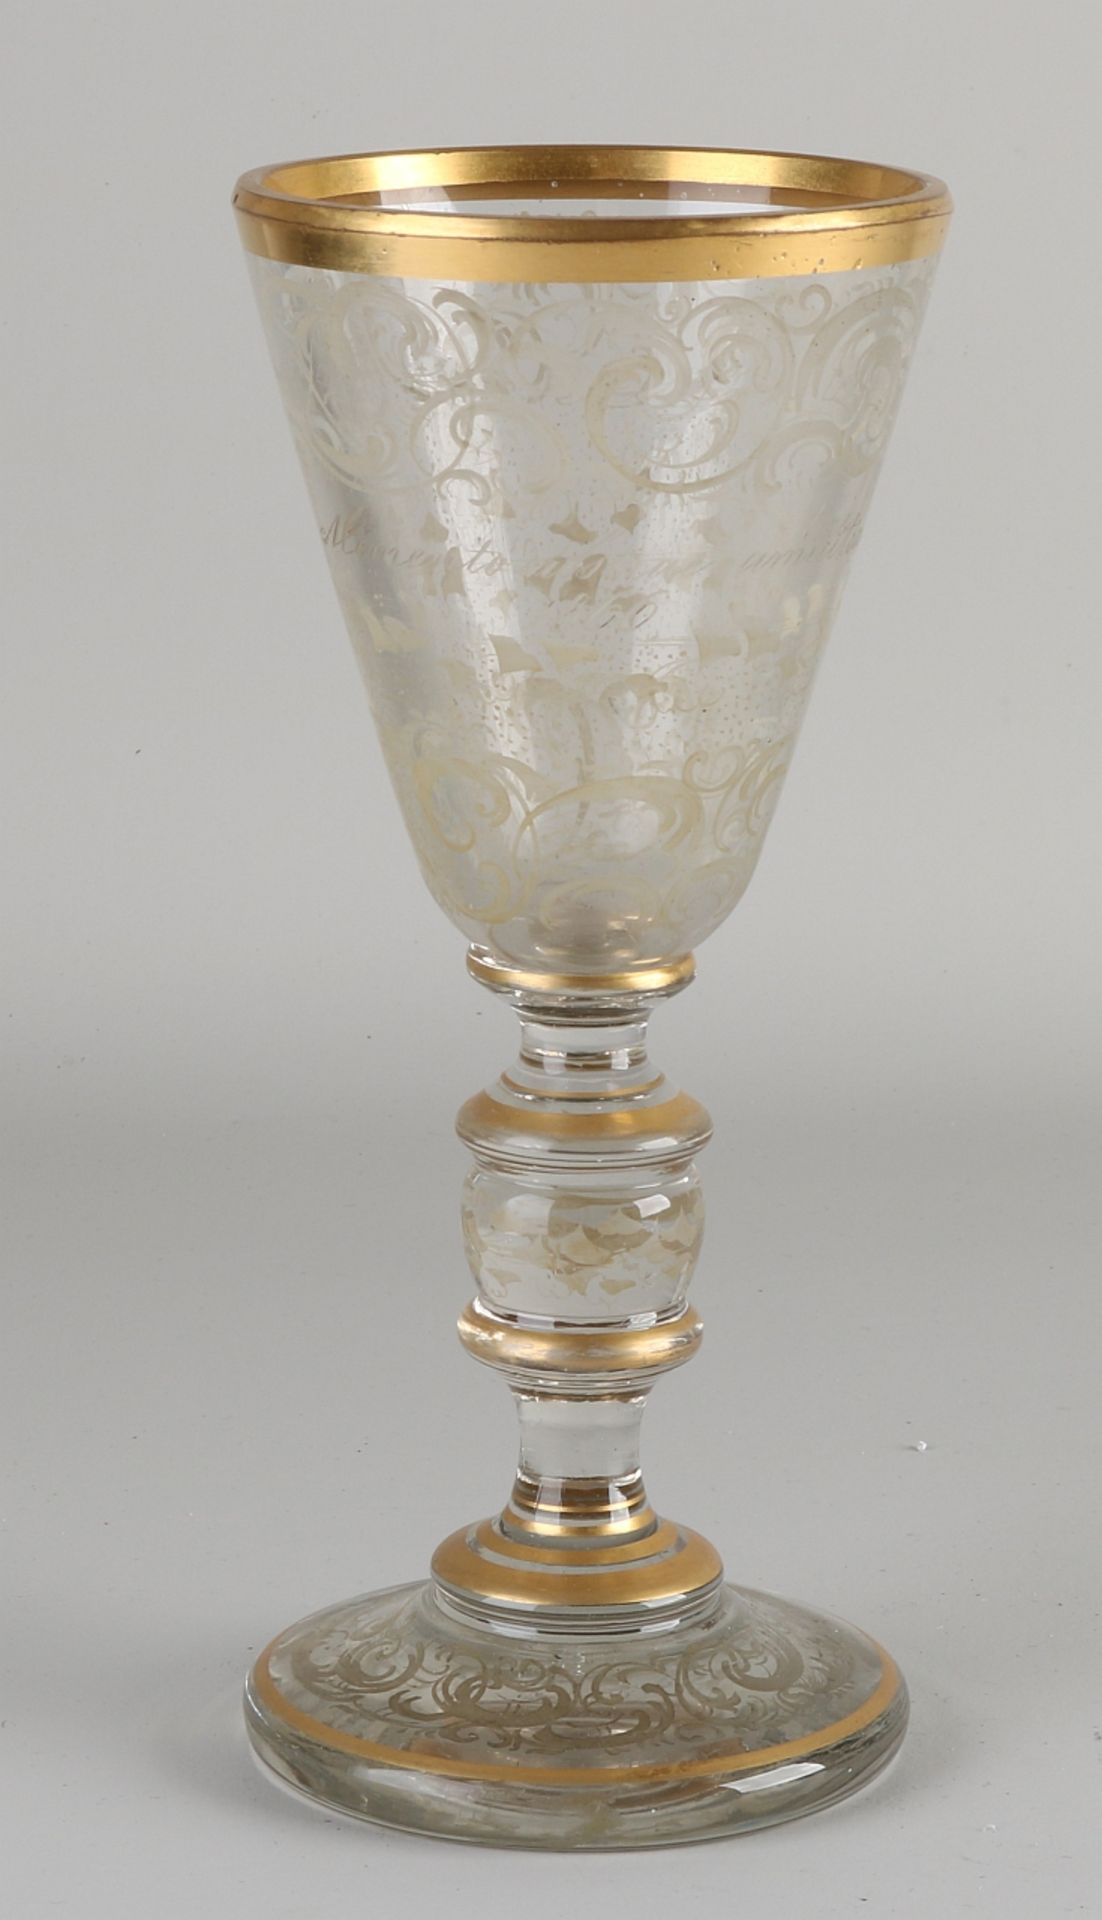 Engraved goblet glass